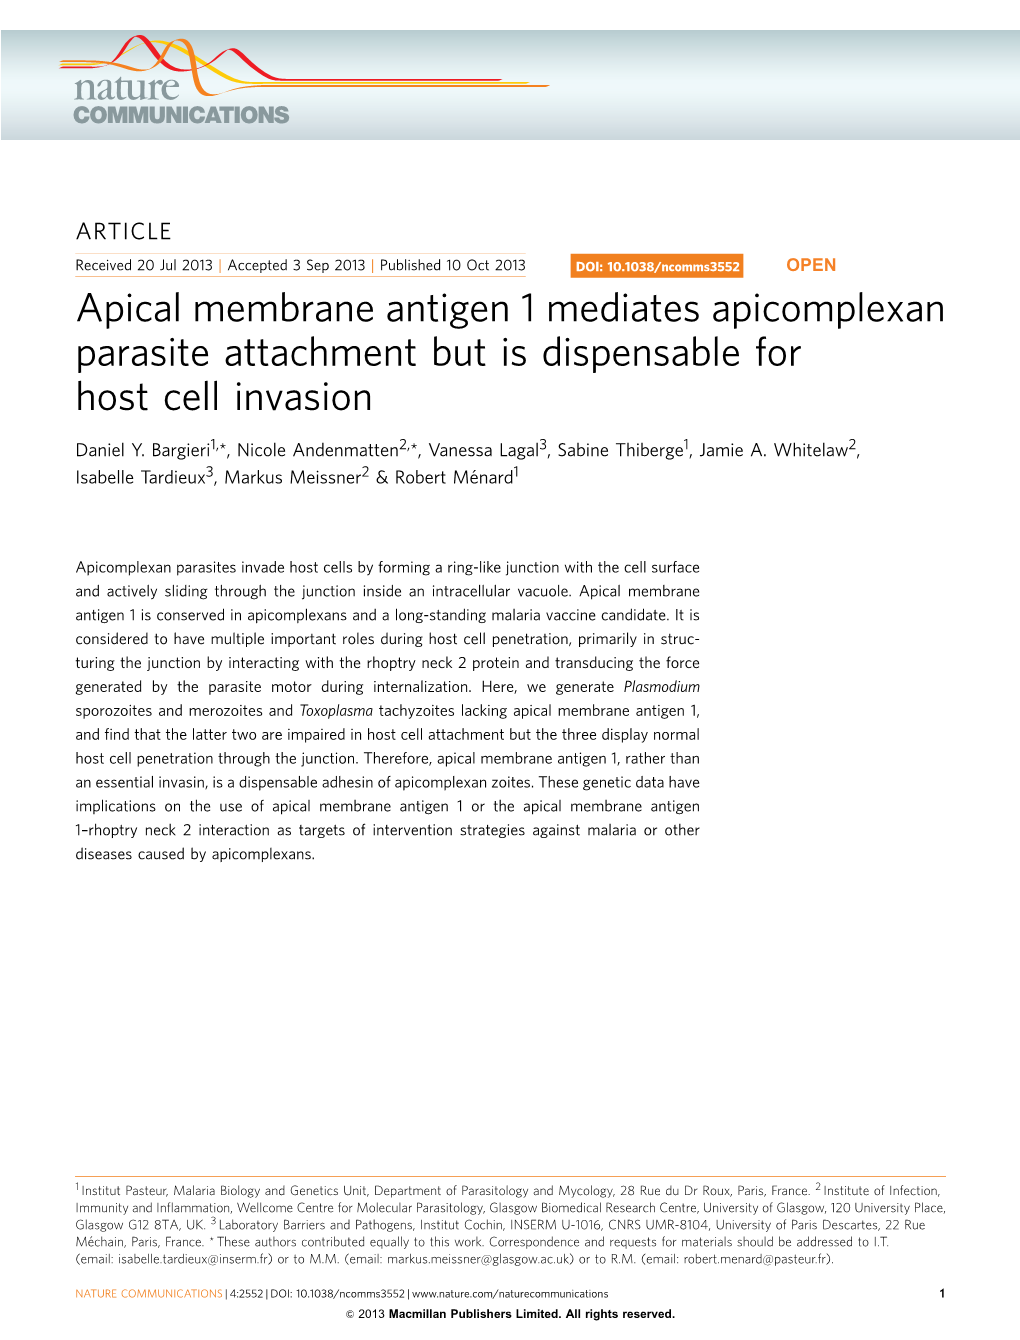 Apical Membrane Antigen 1 Mediates Apicomplexan Parasite Attachment but Is Dispensable for Host Cell Invasion